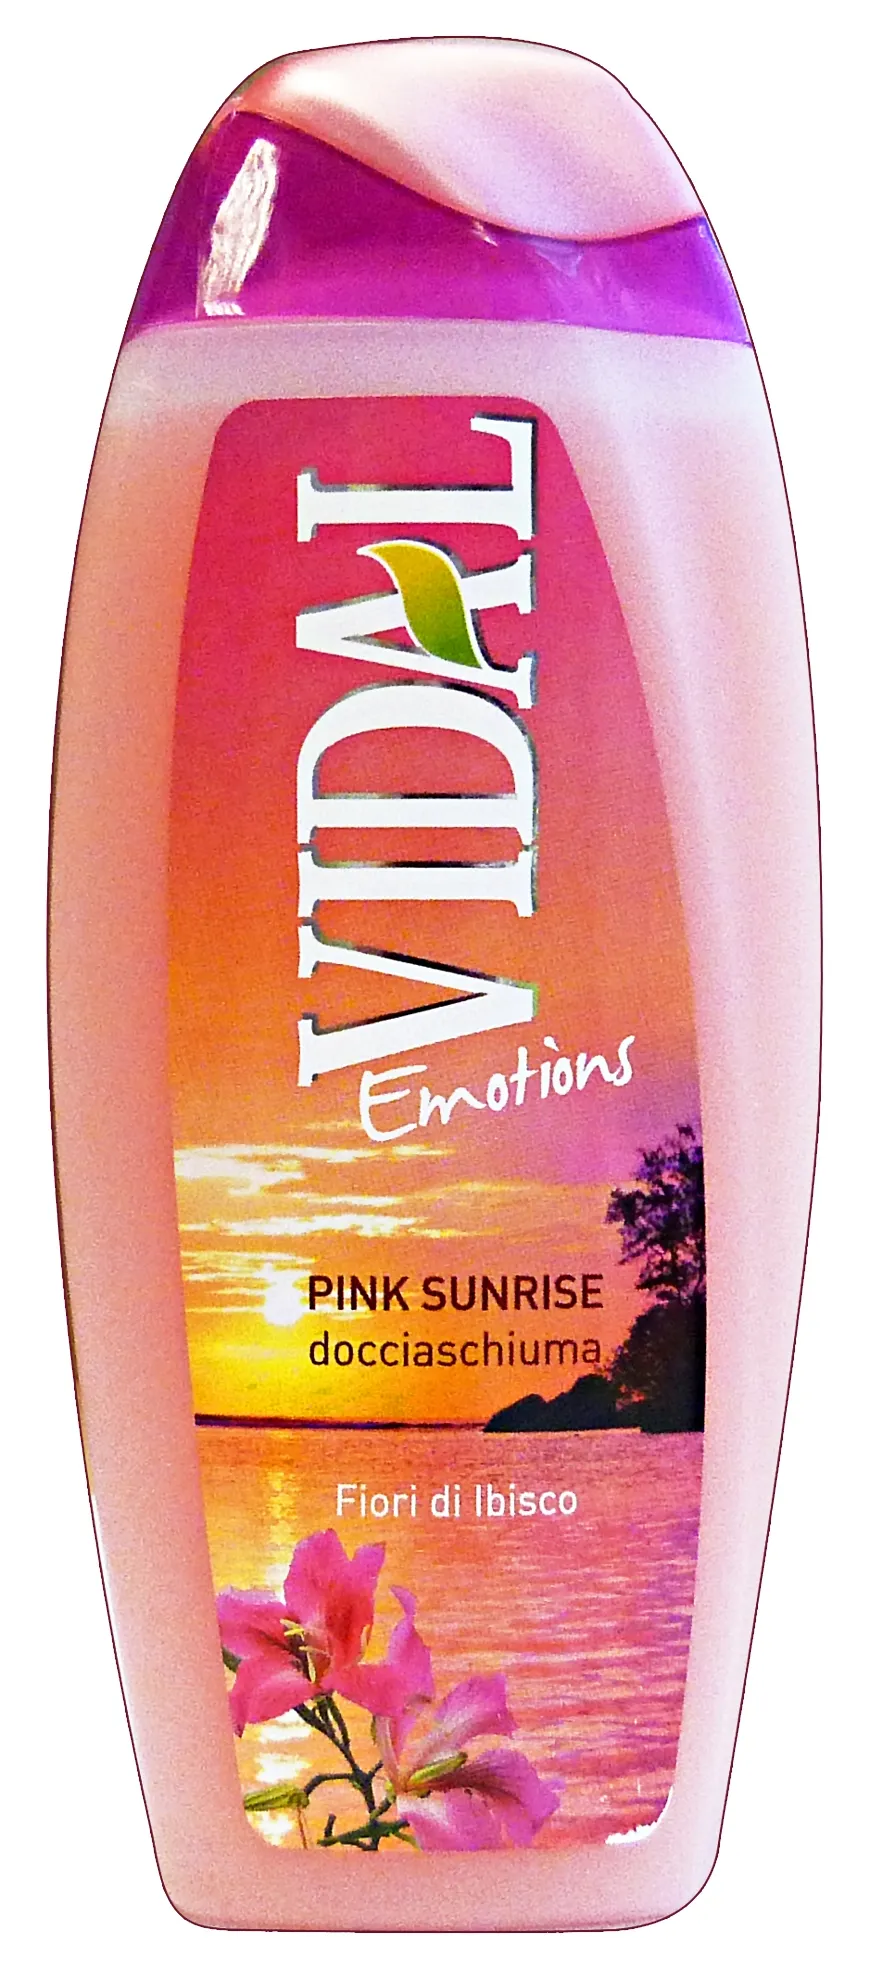 "VIDAL Doccia pink sunrise fiori di ibisco 250 ml."